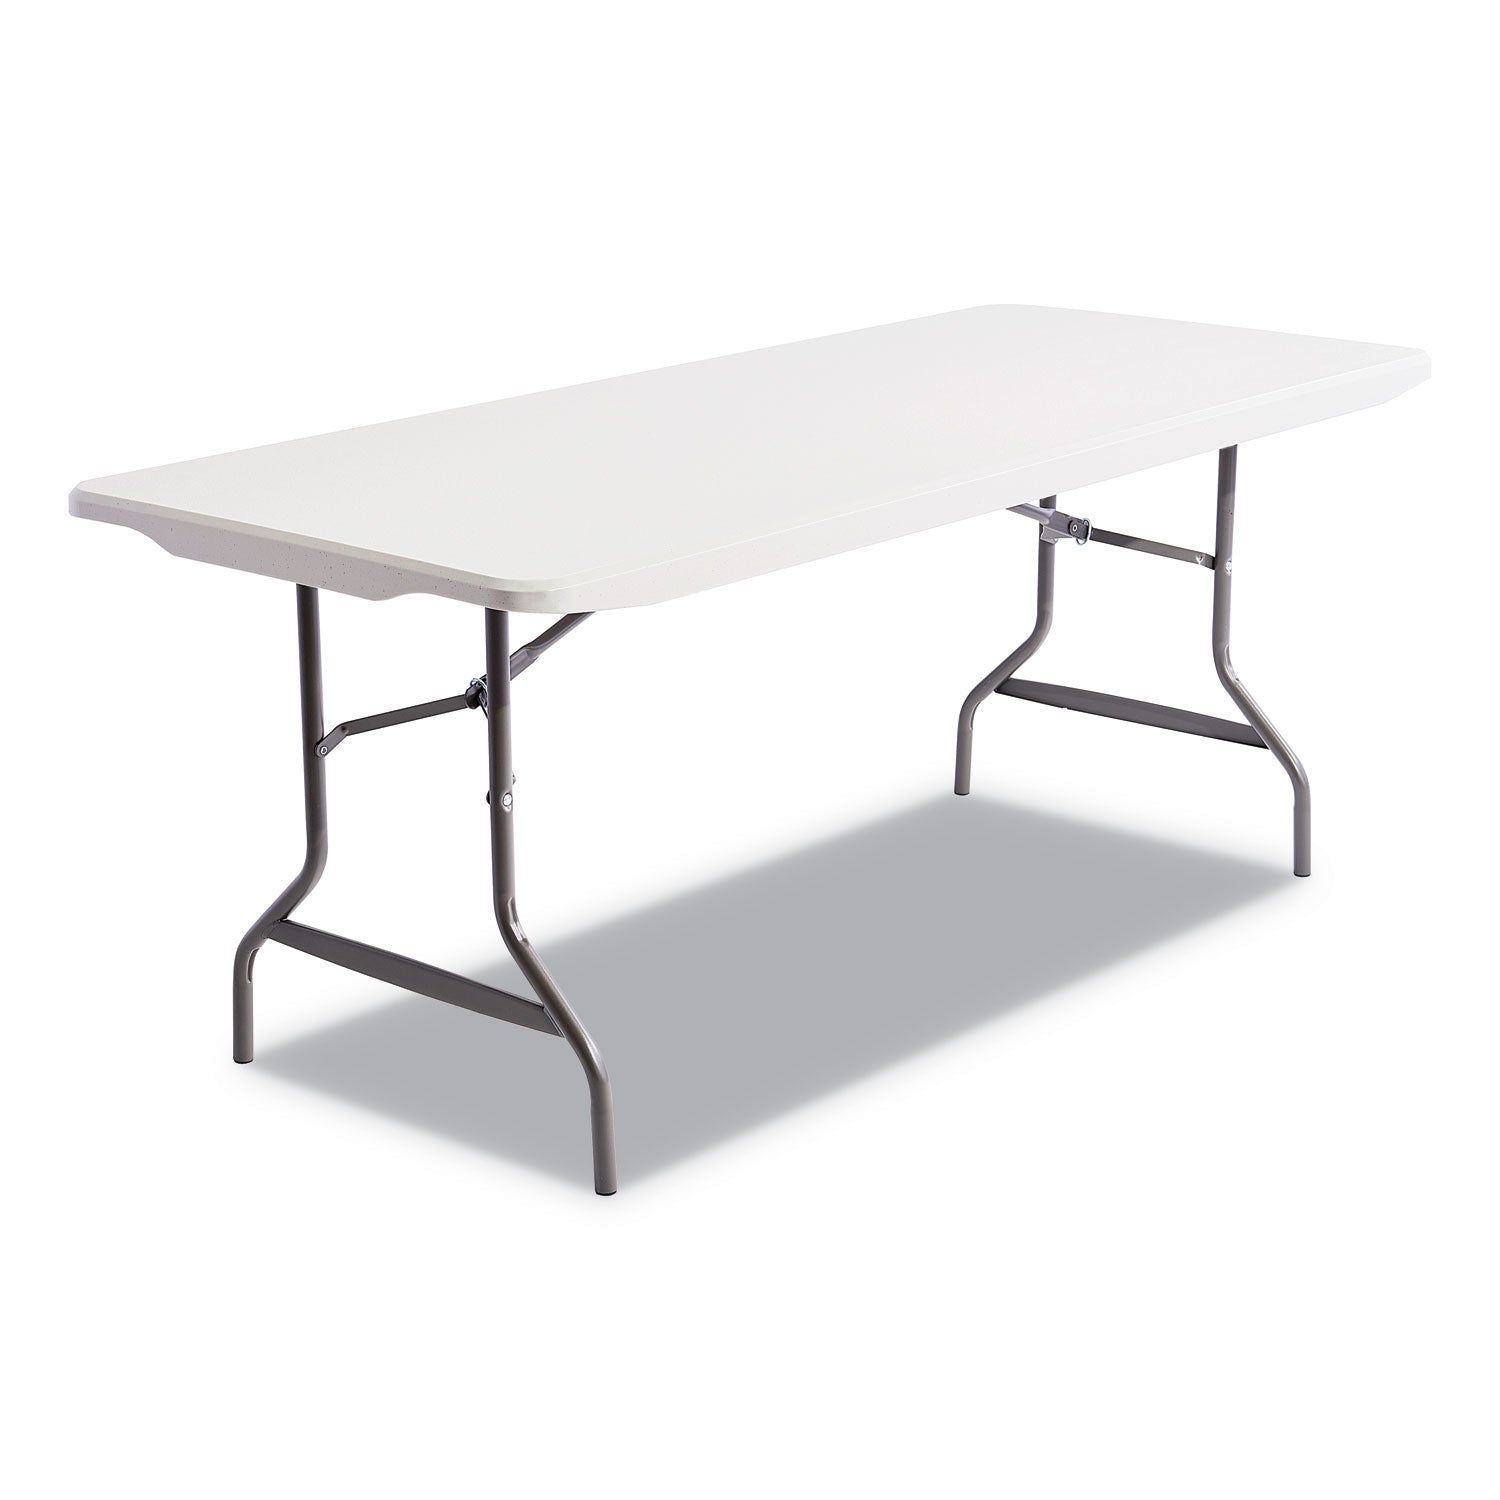 Resin Rectangular Folding Table, Square Edge, 72w x 30d x 29h, Platinum - 